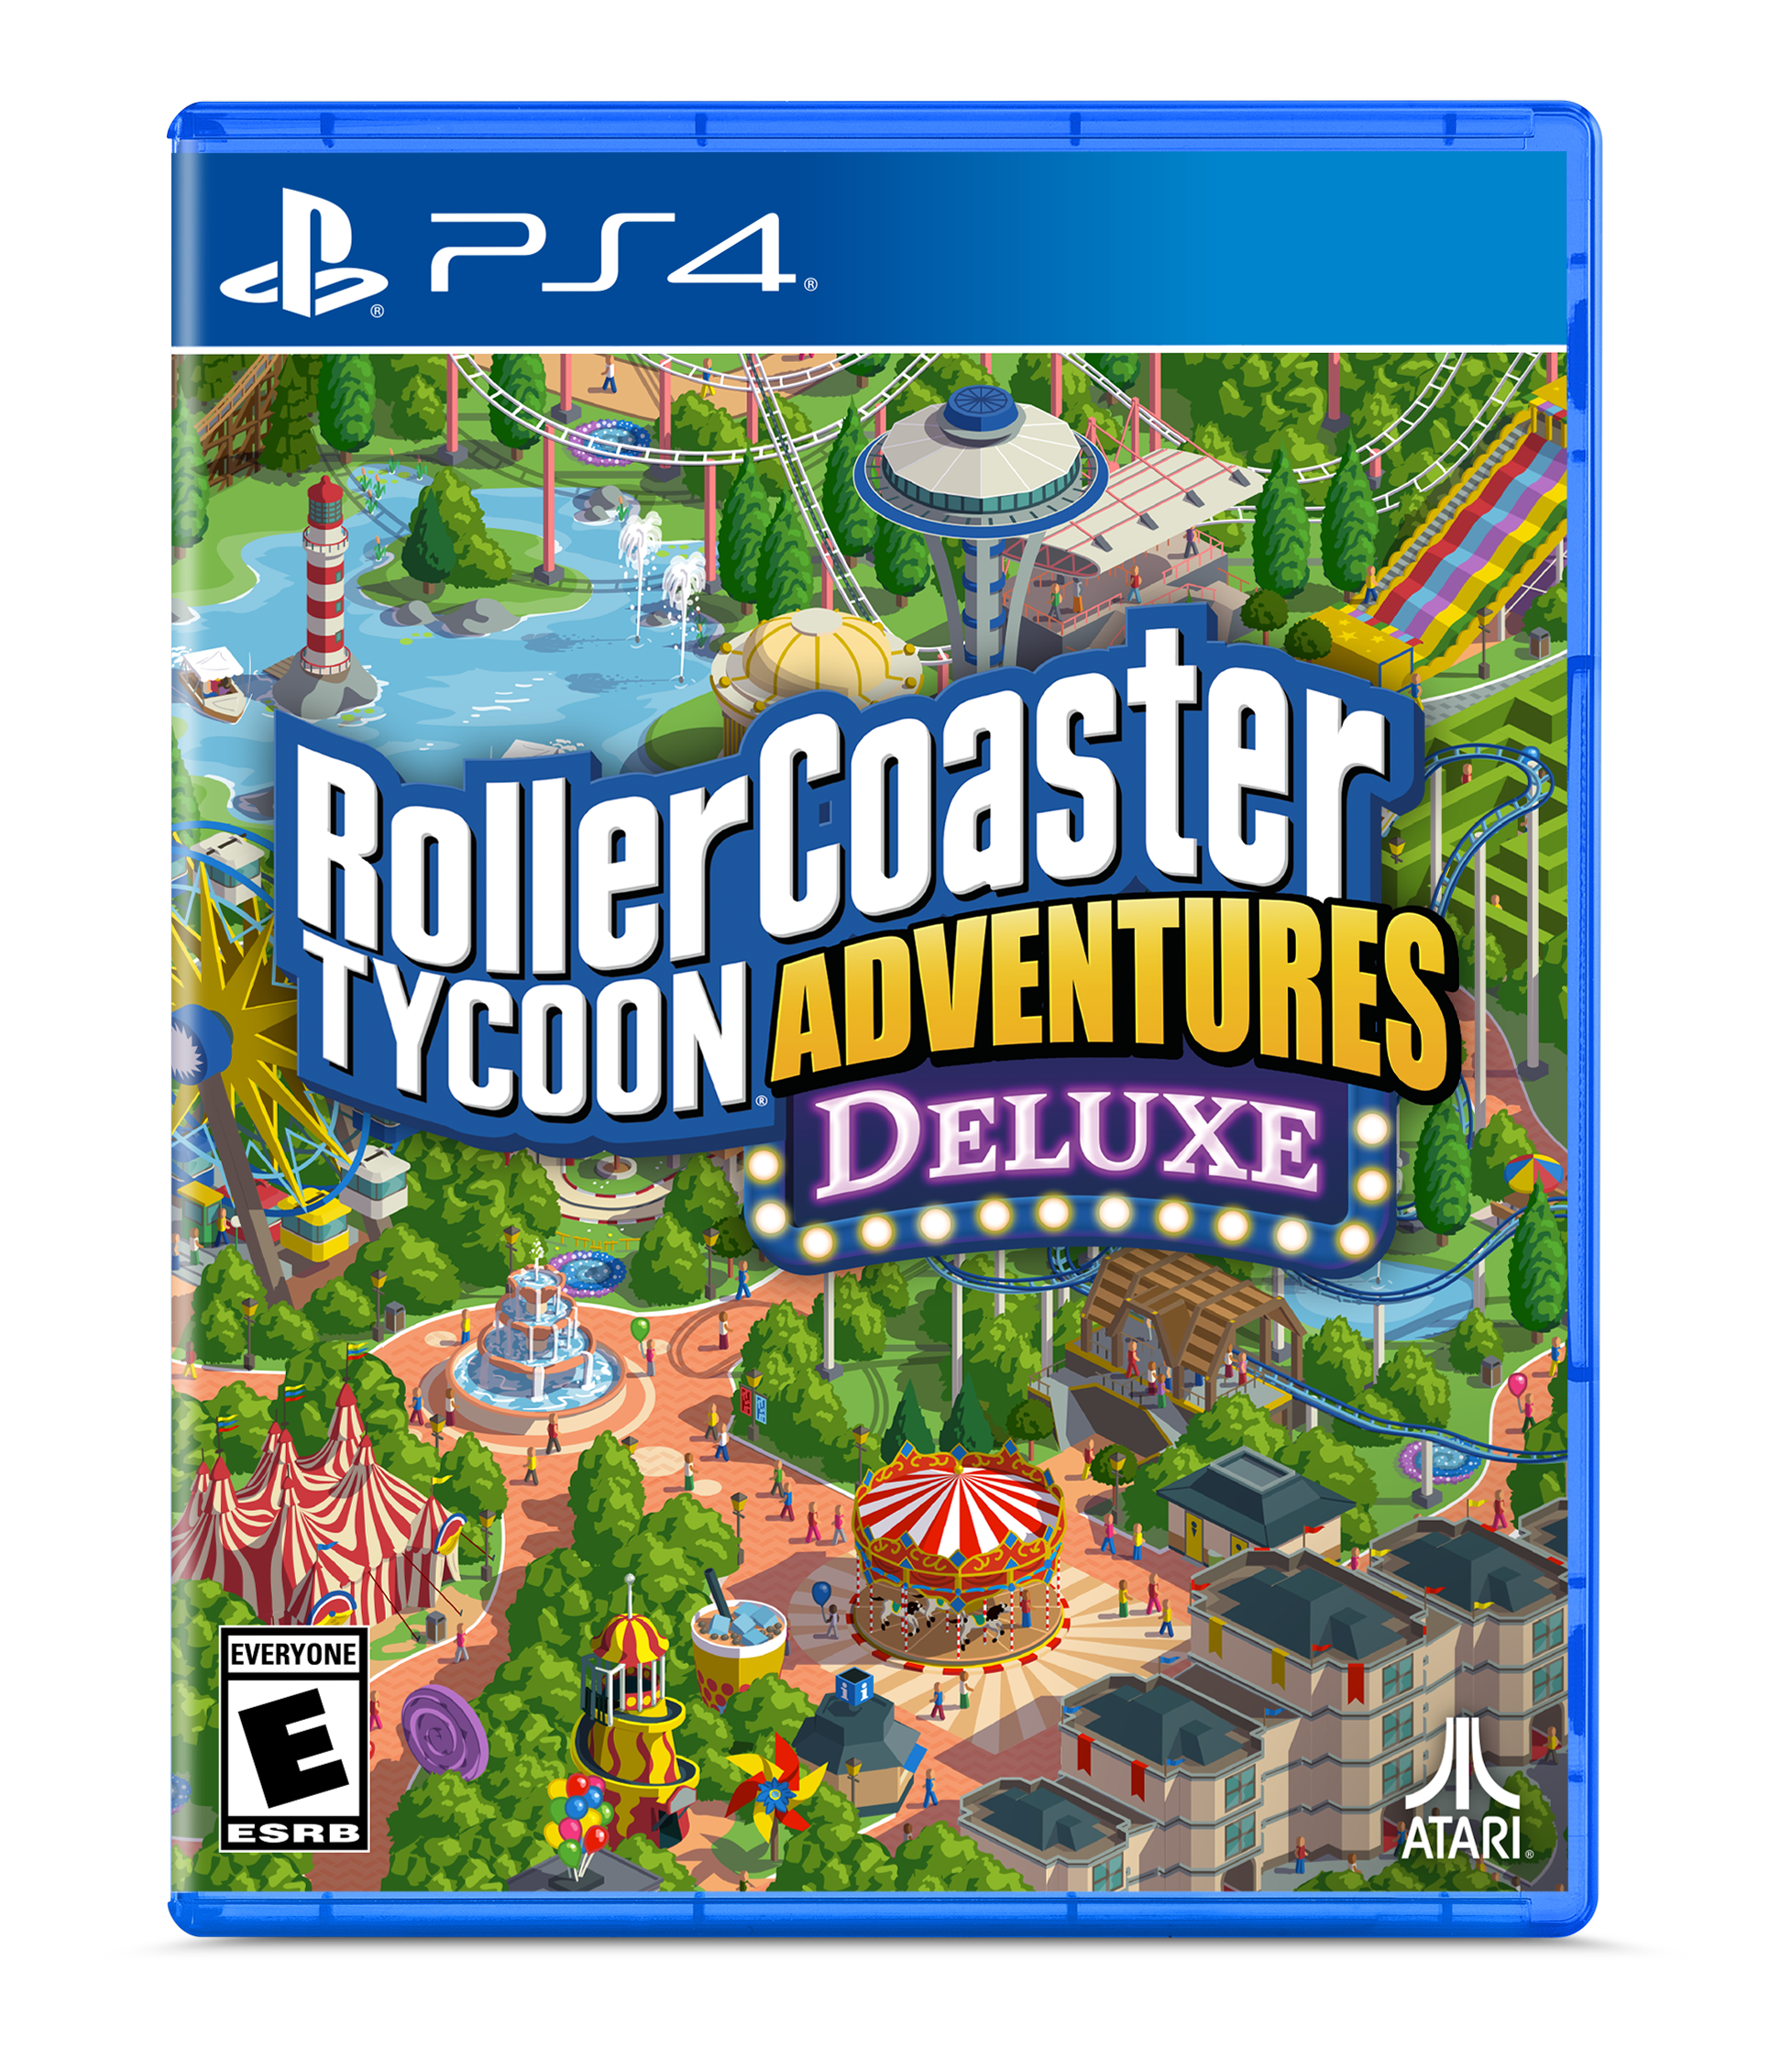 RollerCoaster Tycoon: Deluxe